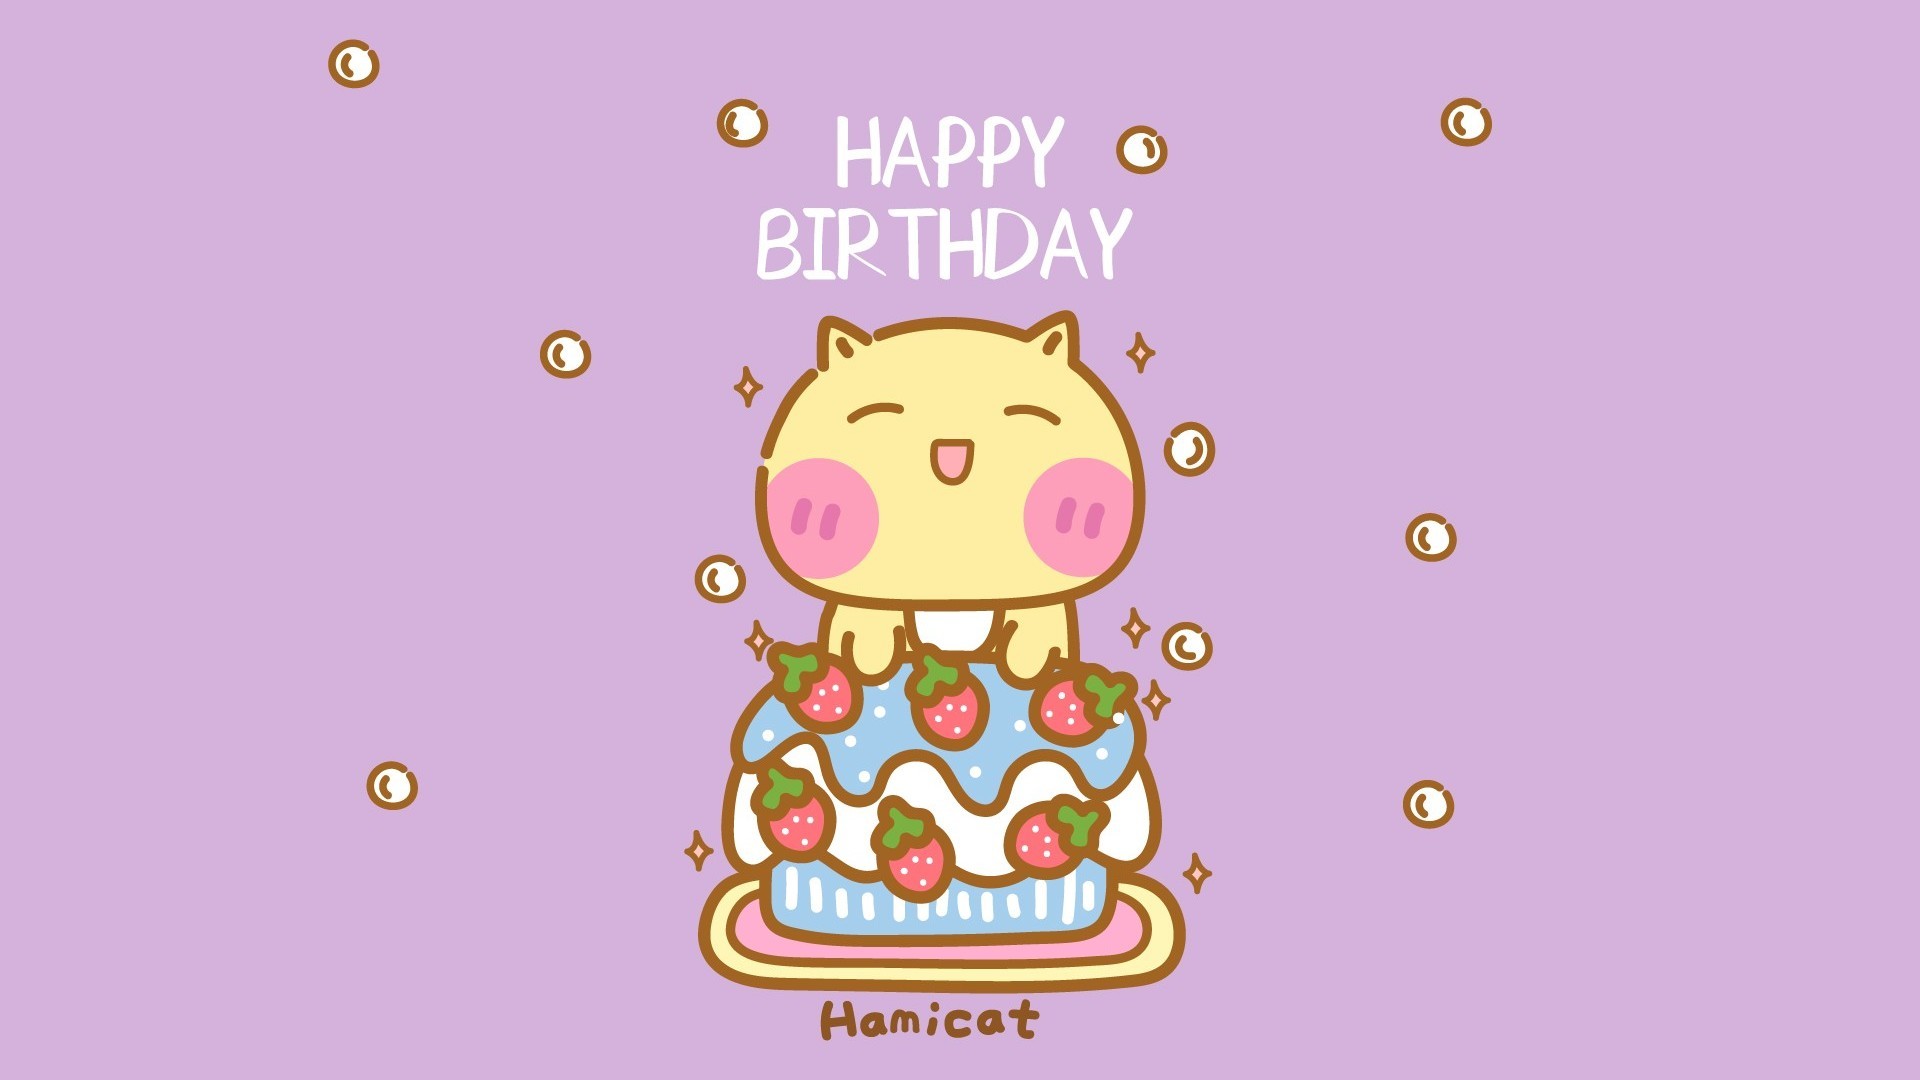 Hamicat哈咪猫Happy birthday生日快乐图片壁纸